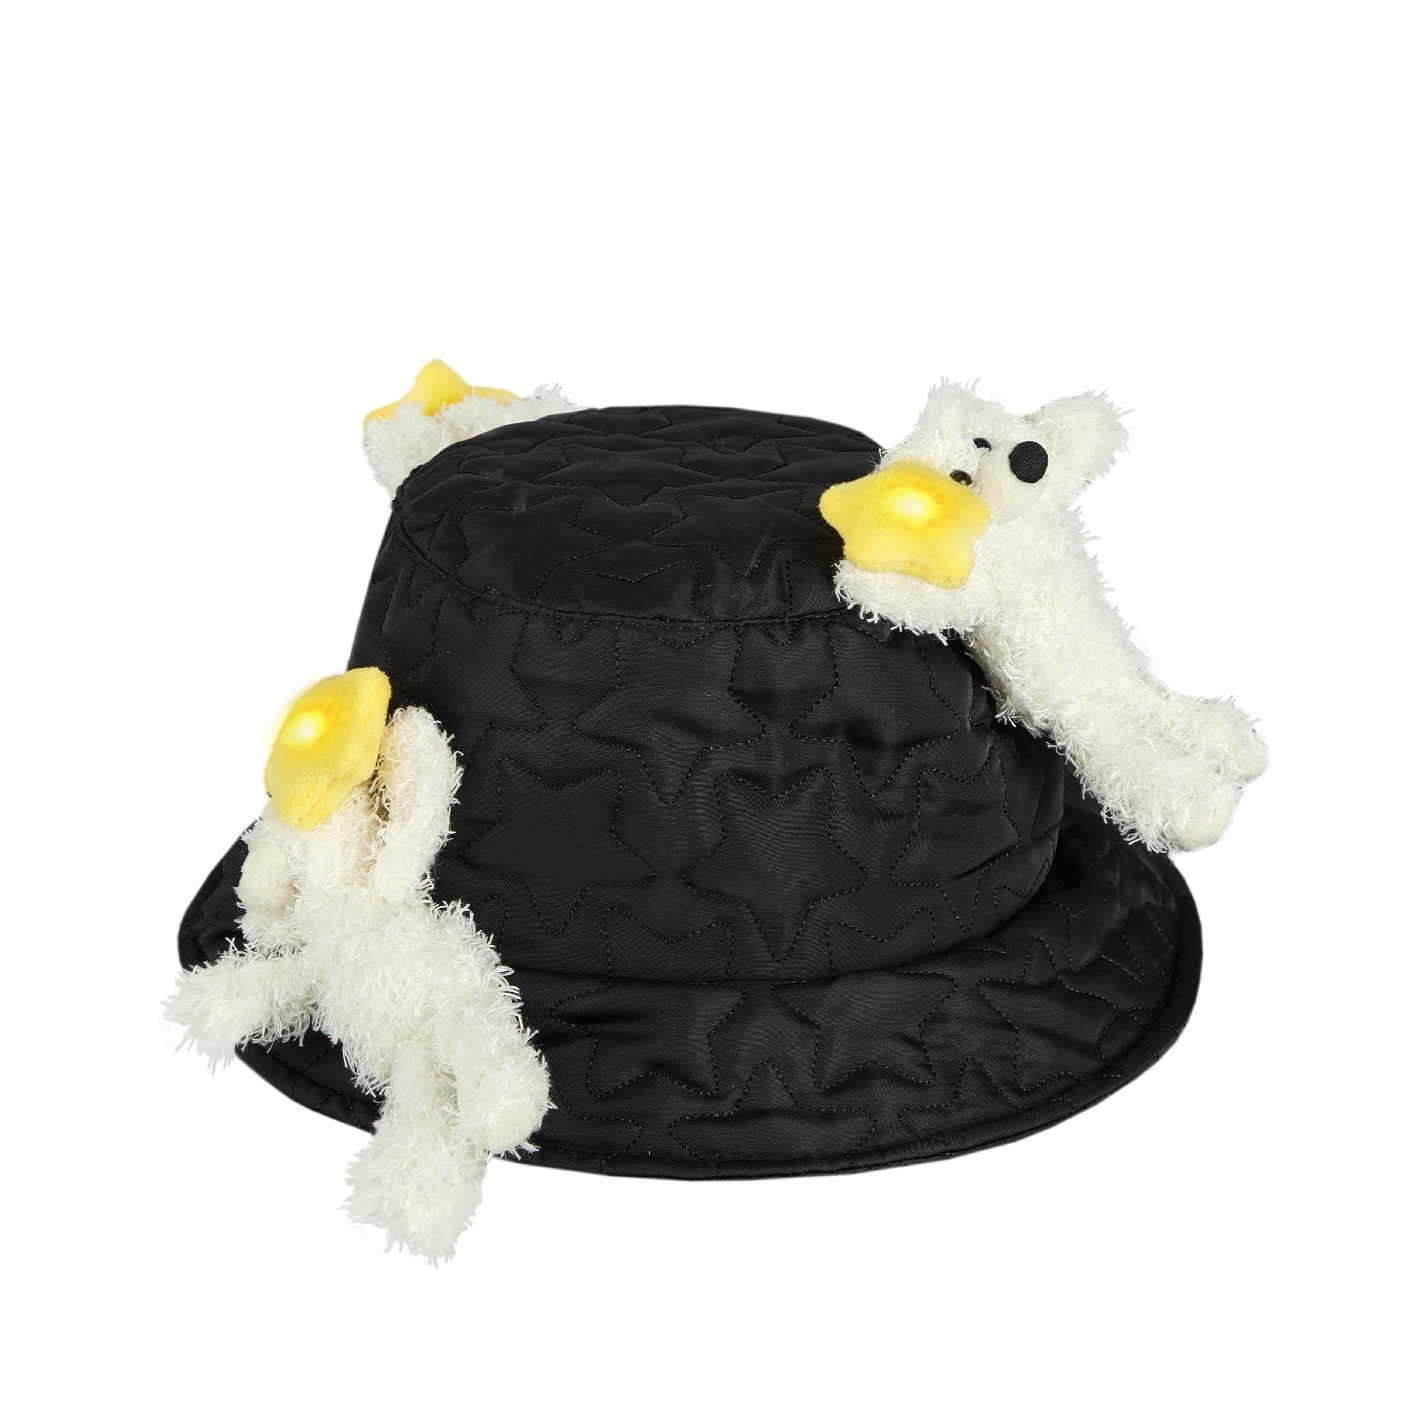 13DE MARZO Bear Lumi Padded Bucket Hat Black